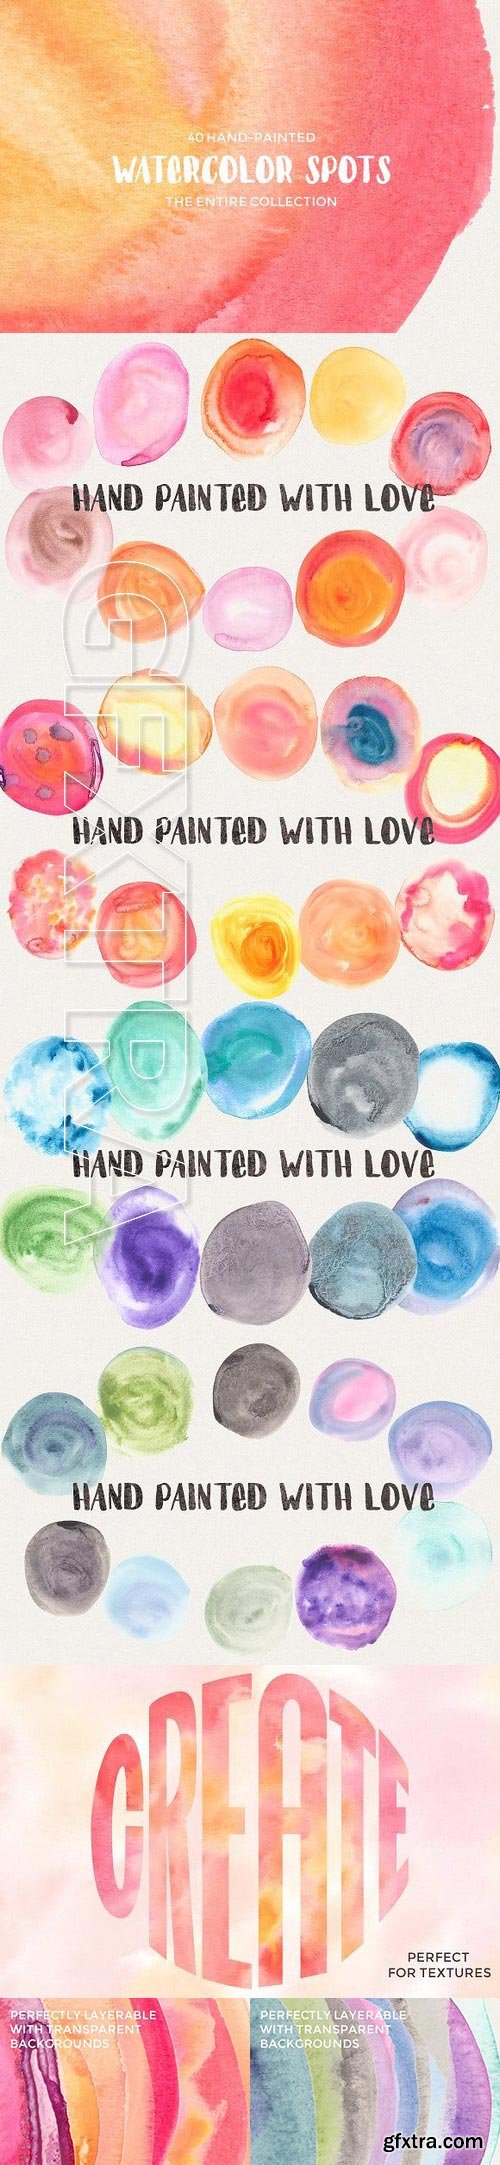 CM - 40 Hand-Painted Watercolor Spots 458701